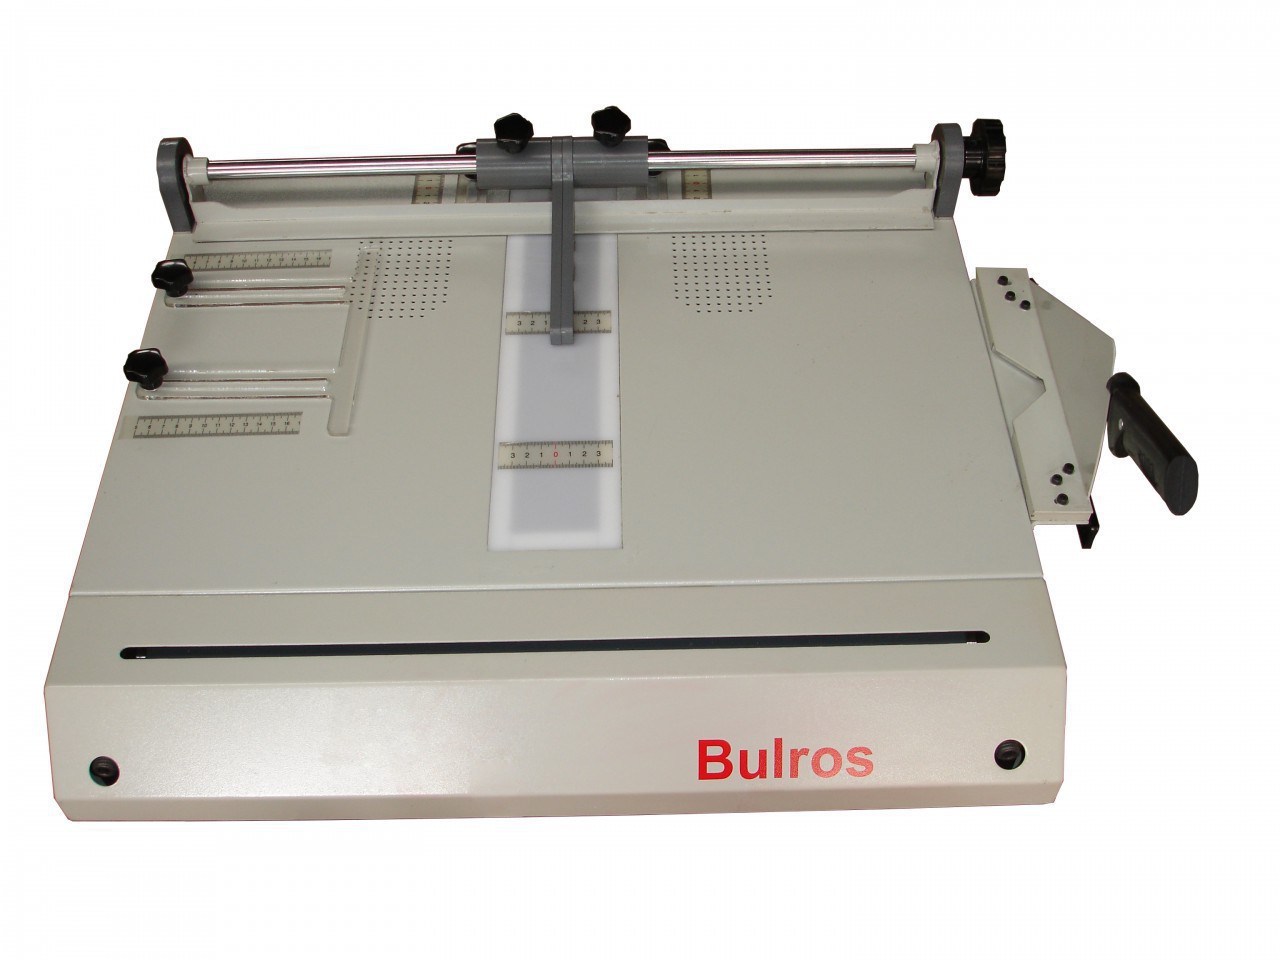 Крышкоделательный аппарат Bulros professional series 100K, А3 - 136568 руб.